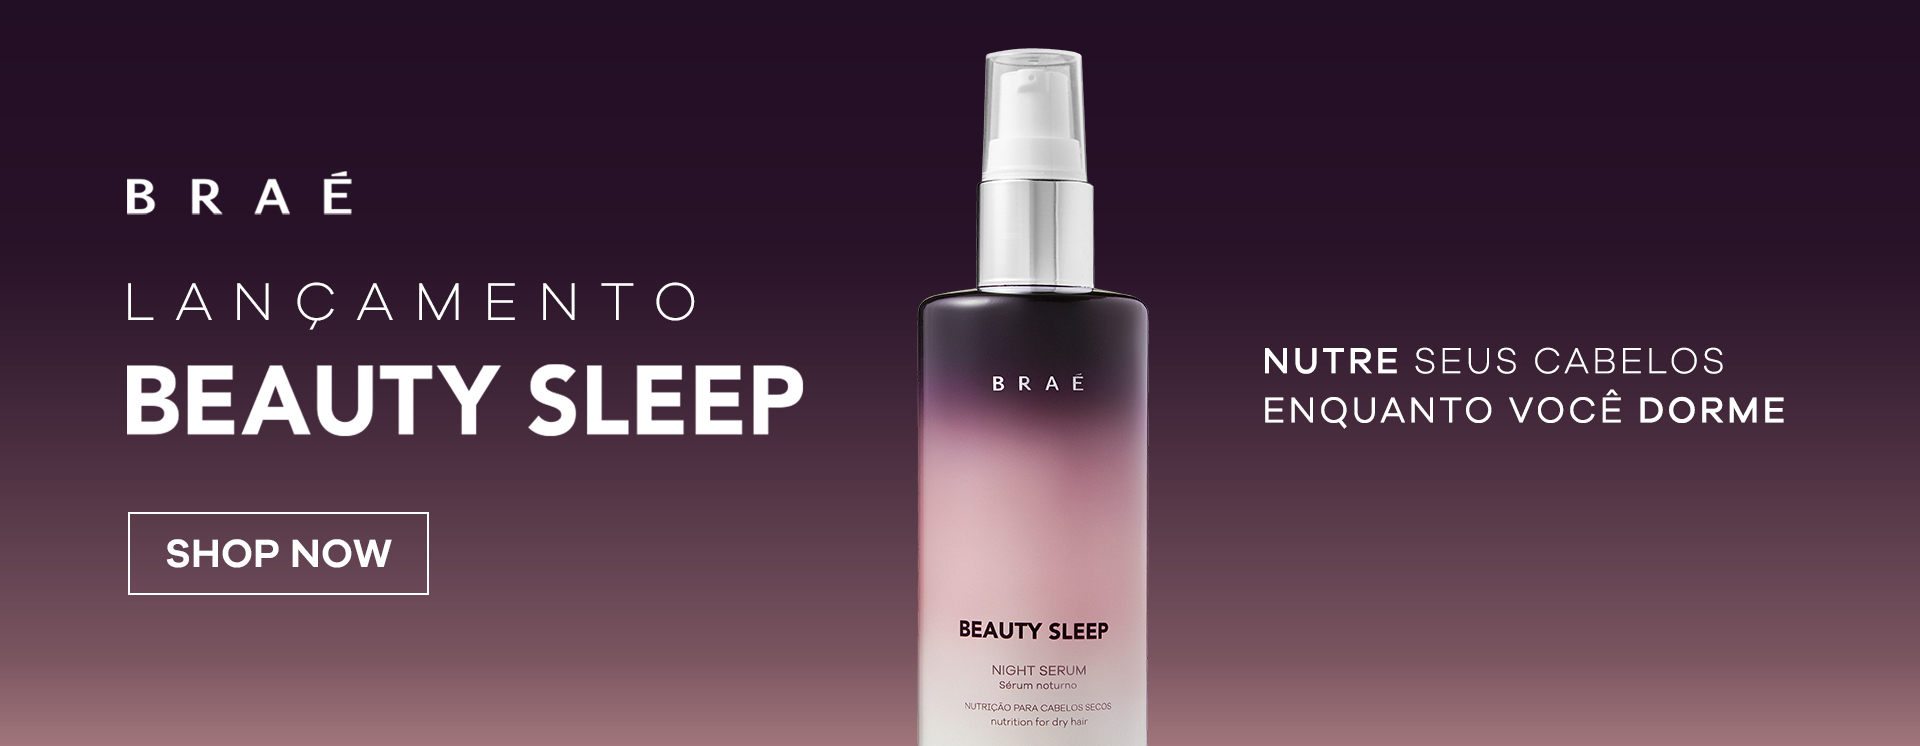 Lançamento Beauty Sleep